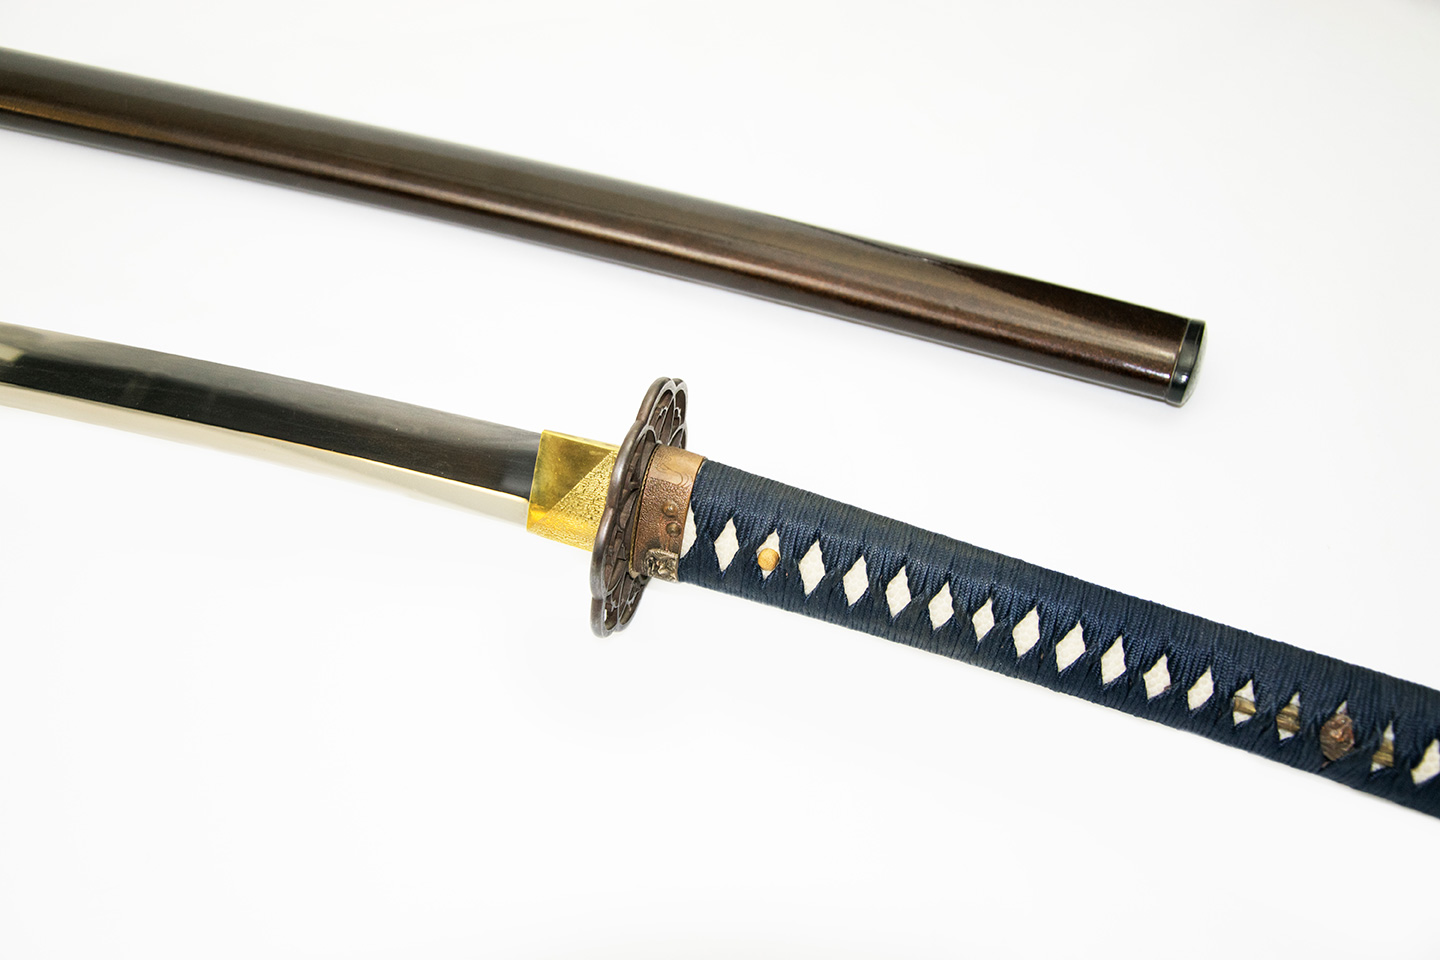 Катана: история, особенности и характеристики японского меча самураев